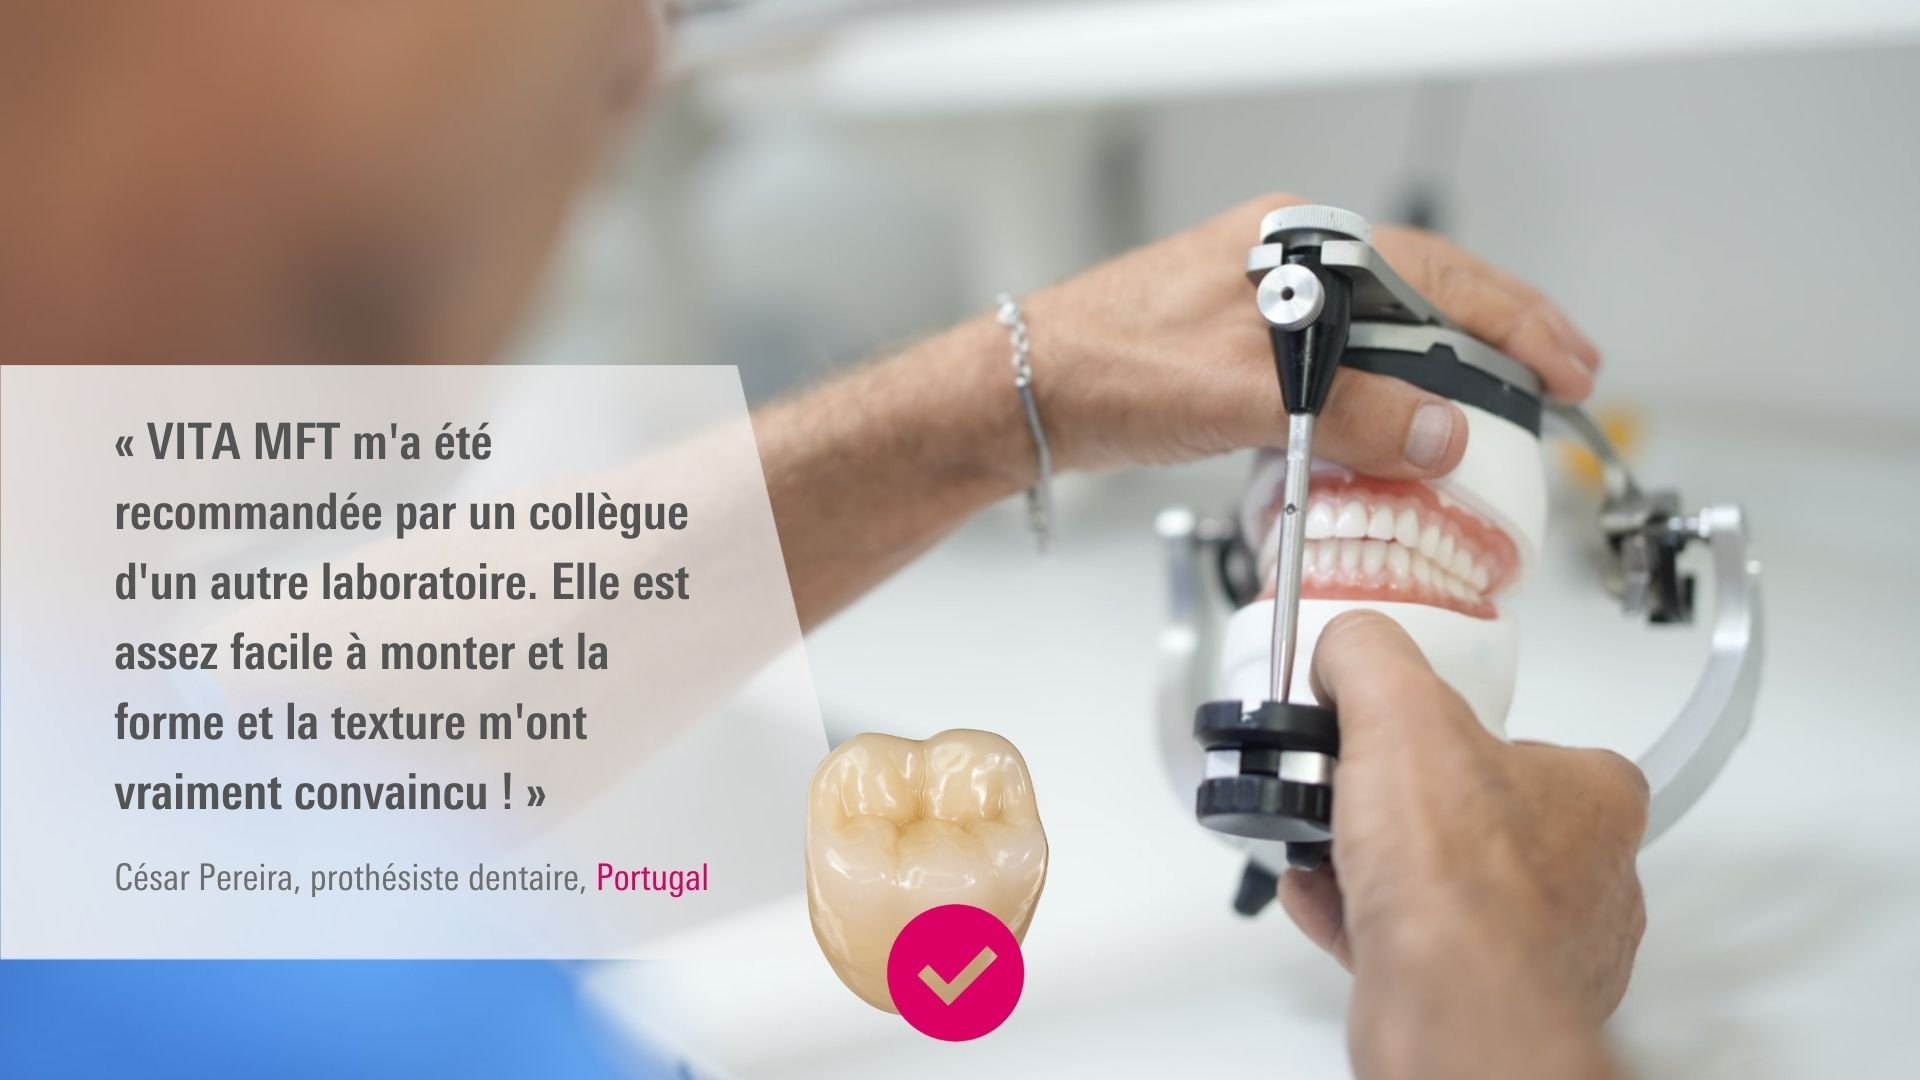 VITA MFT. César Pereira, prothésiste dentaire, Portugal